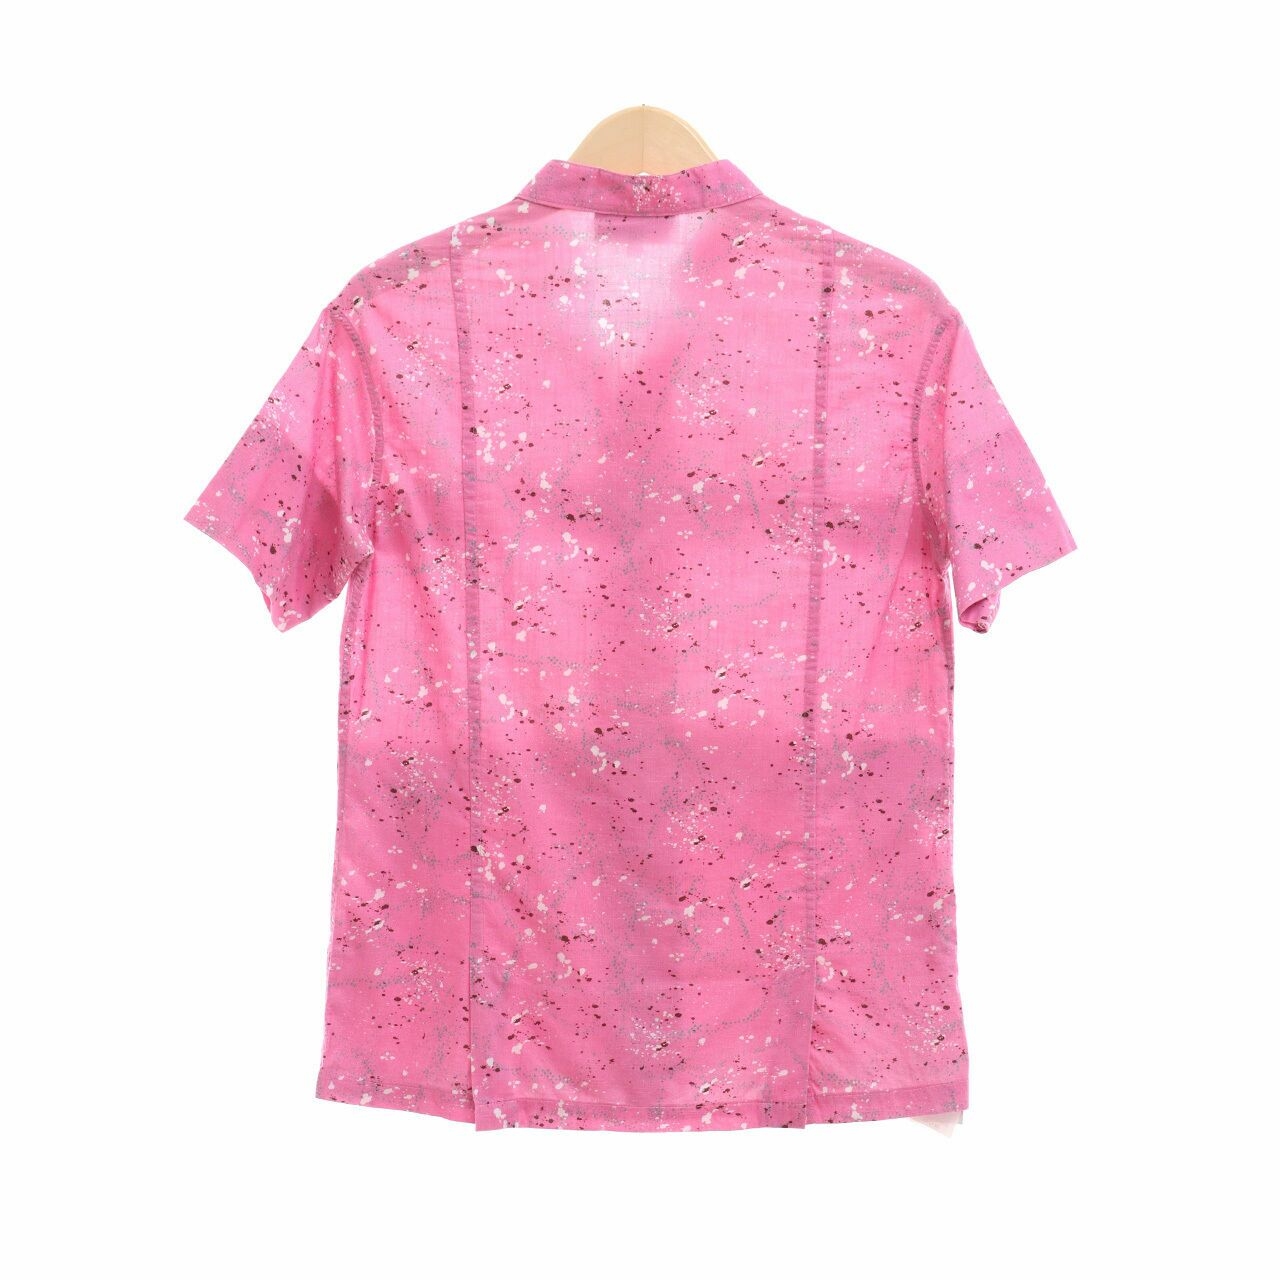 Danjyo Hiyoji Pink Patterned Shirt